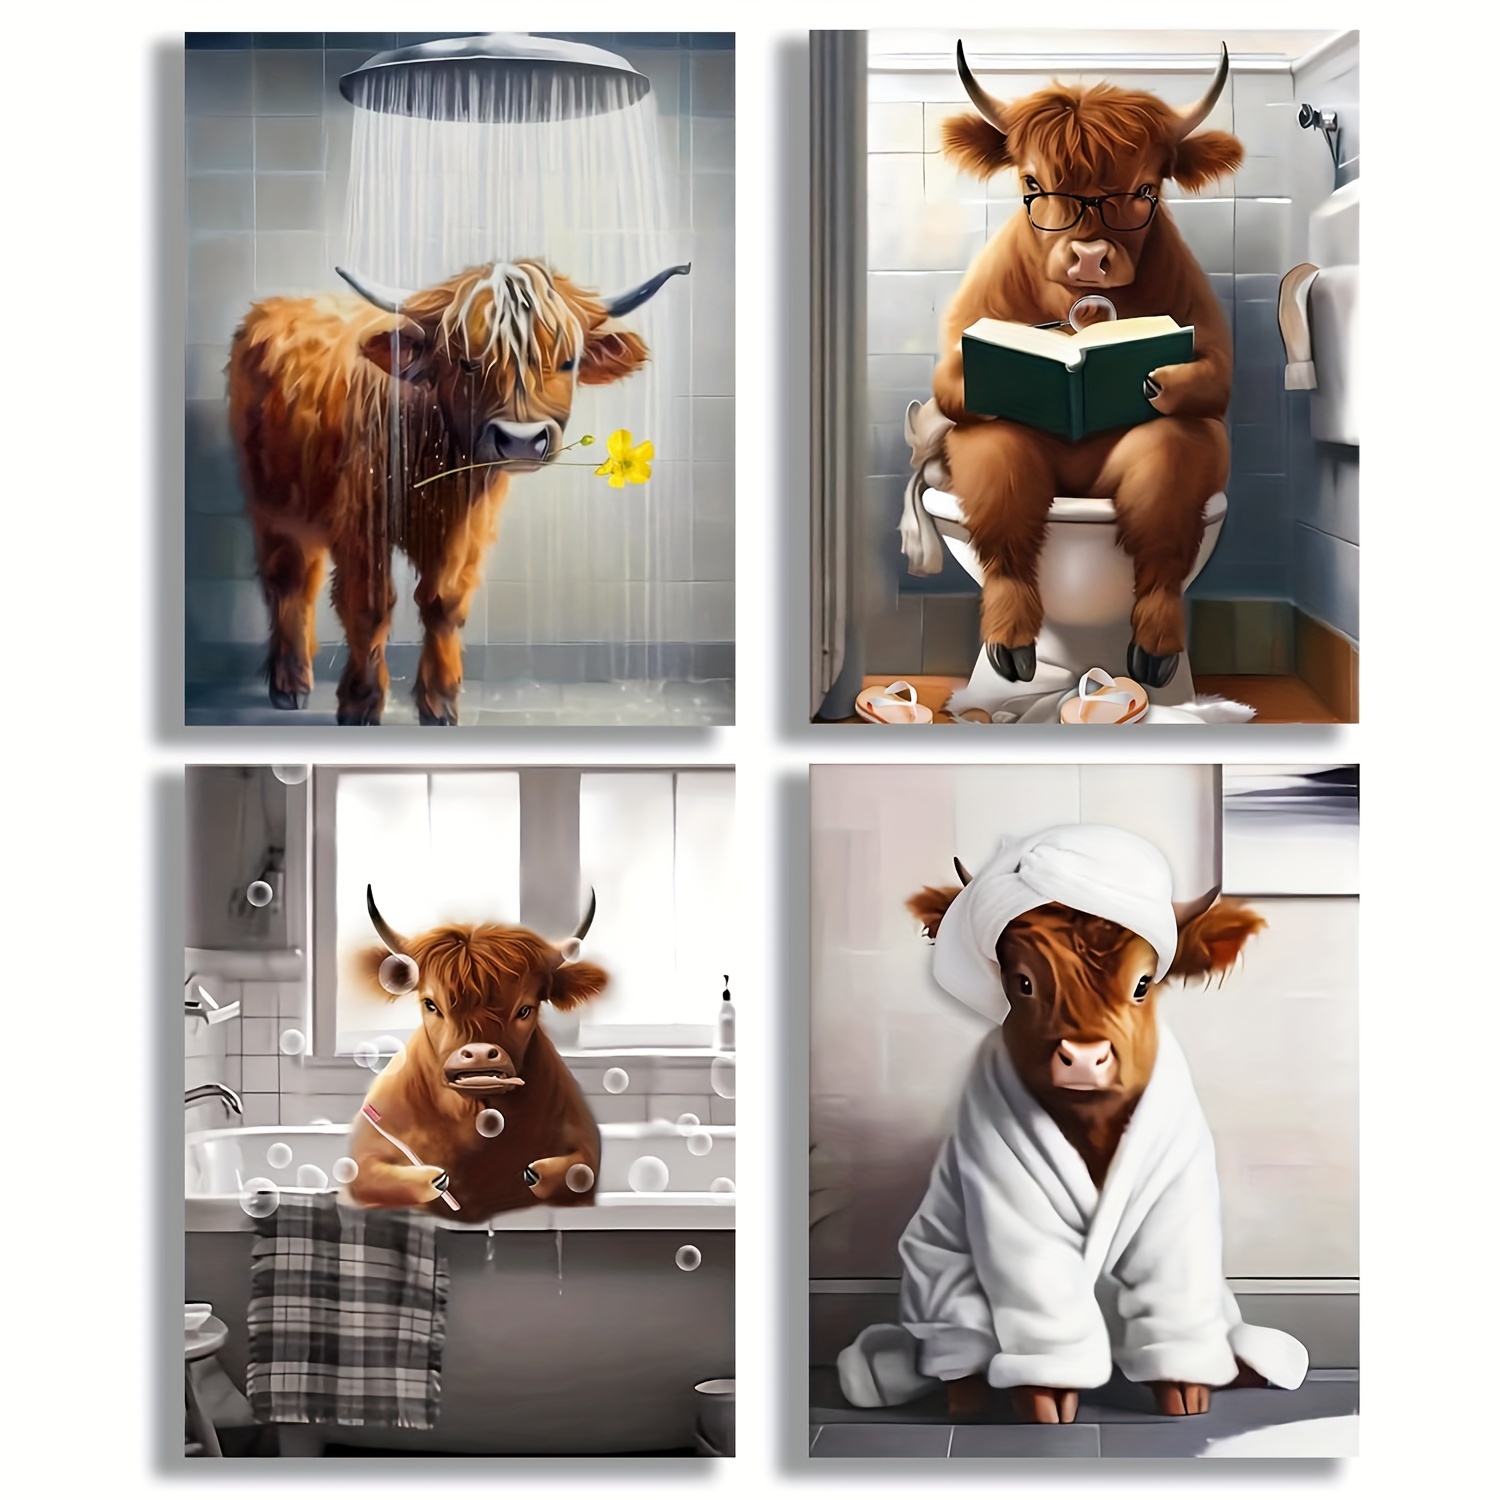 

4pcs Funny Highland Cow Bathroom Wall Art Prints, Brown Cow Vintage Humor Animal Artwork, For Bathroom Farmhouse Decoration Bathroom Decoration, No Frame